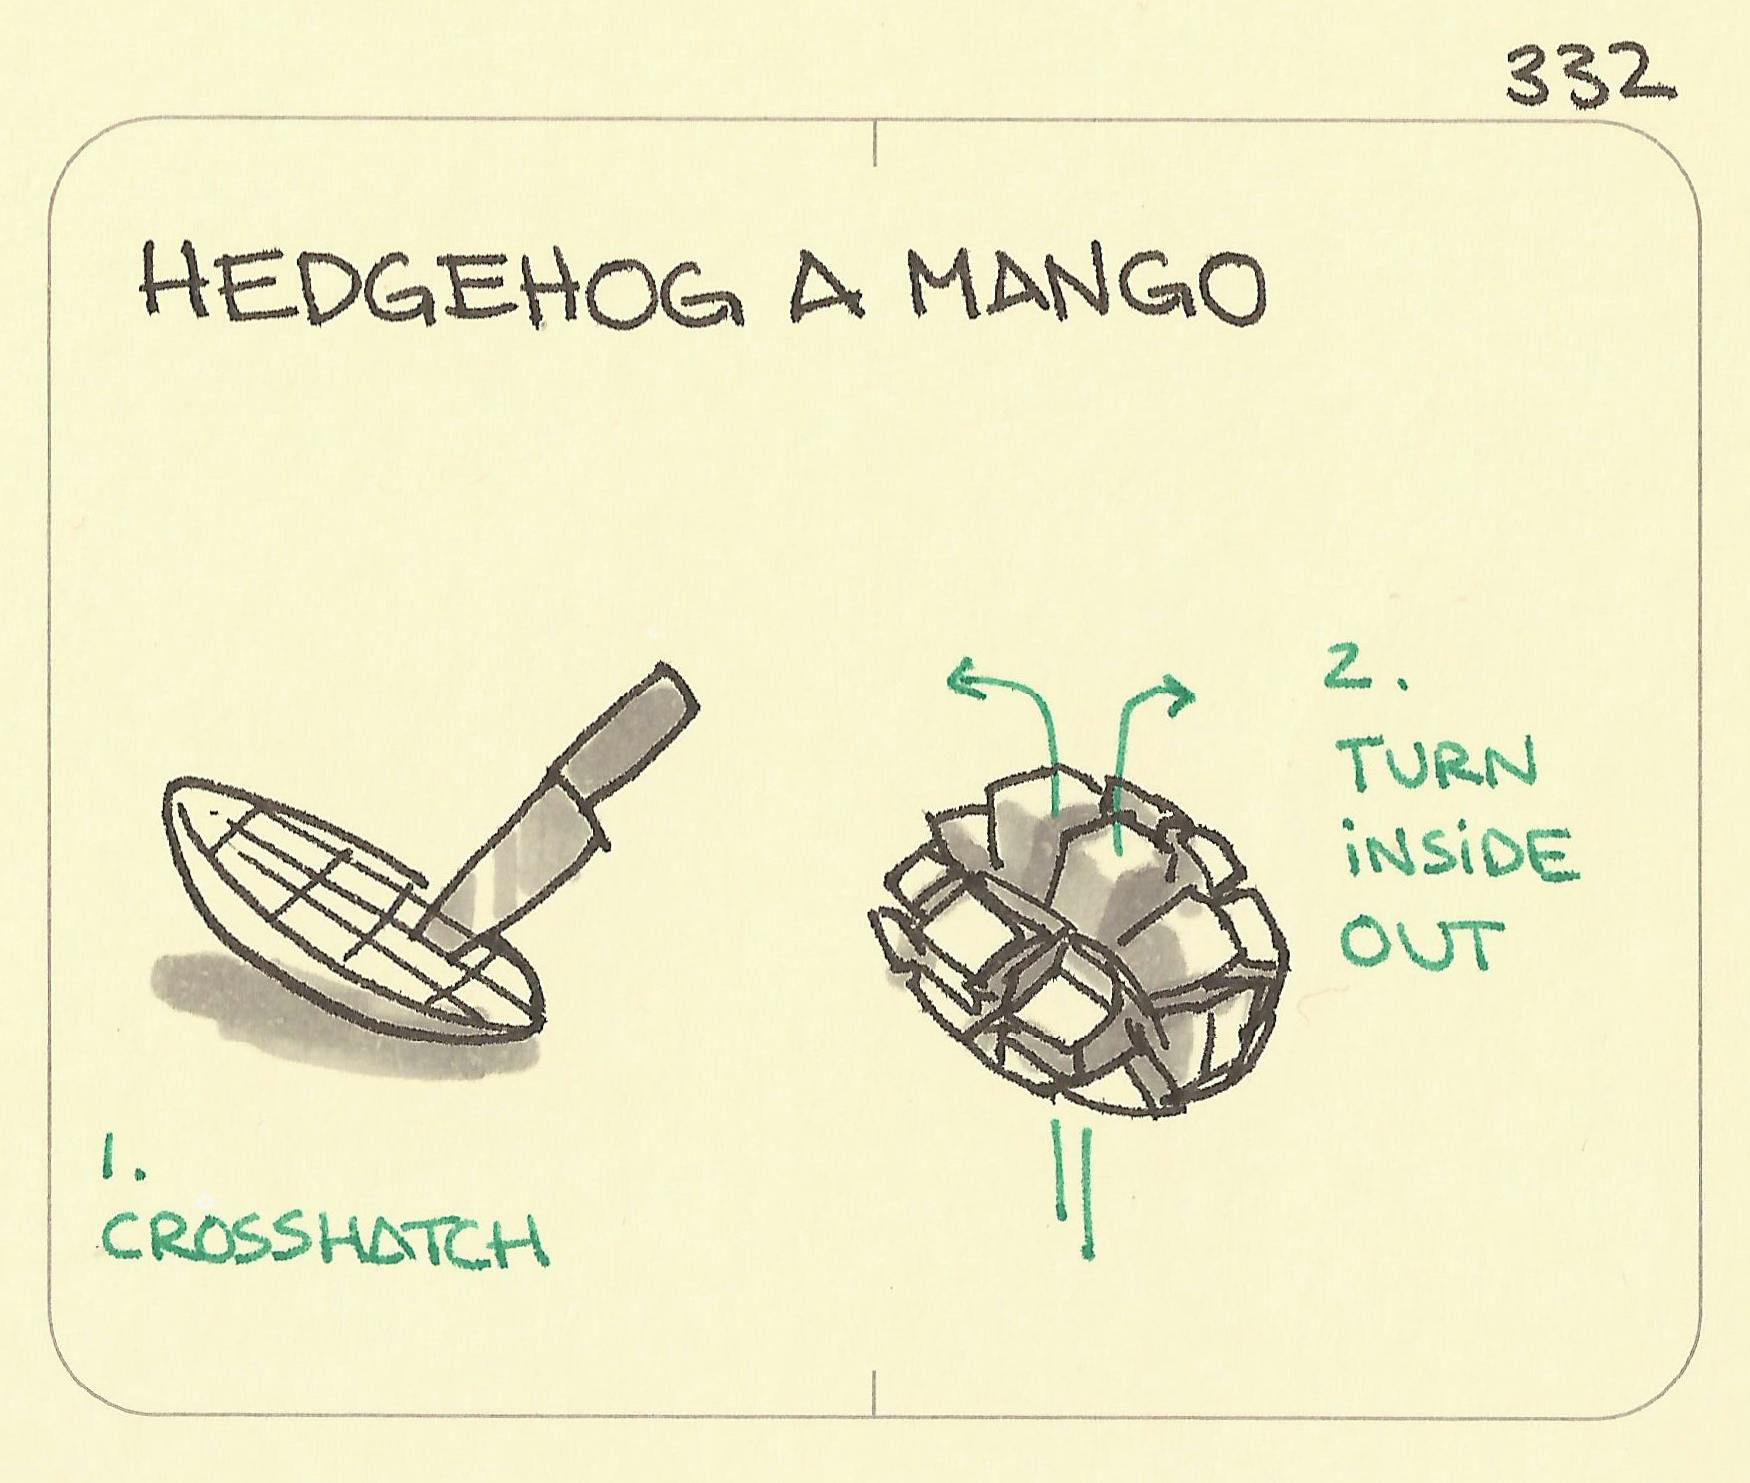 Hedgehog a mango - Sketchplanations